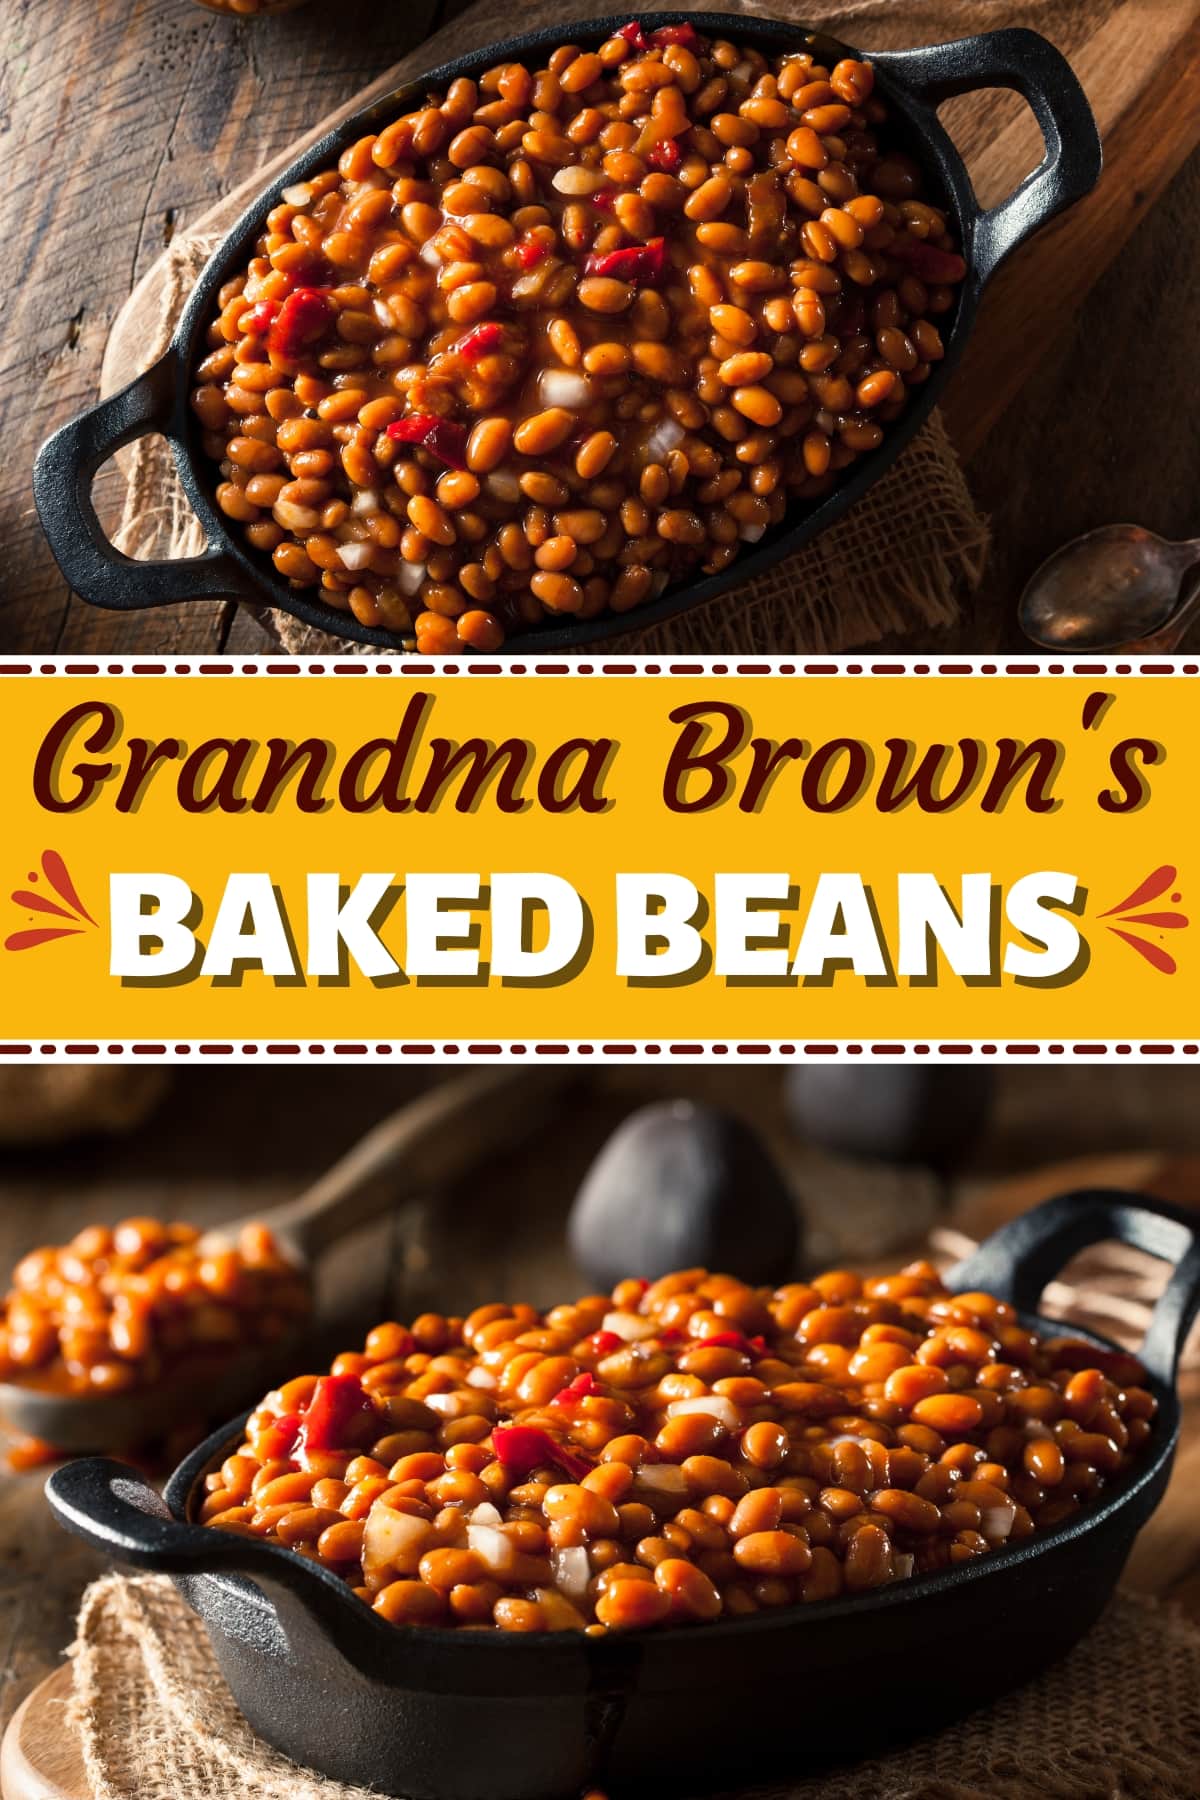 Grandma Brown's Baked Beans
